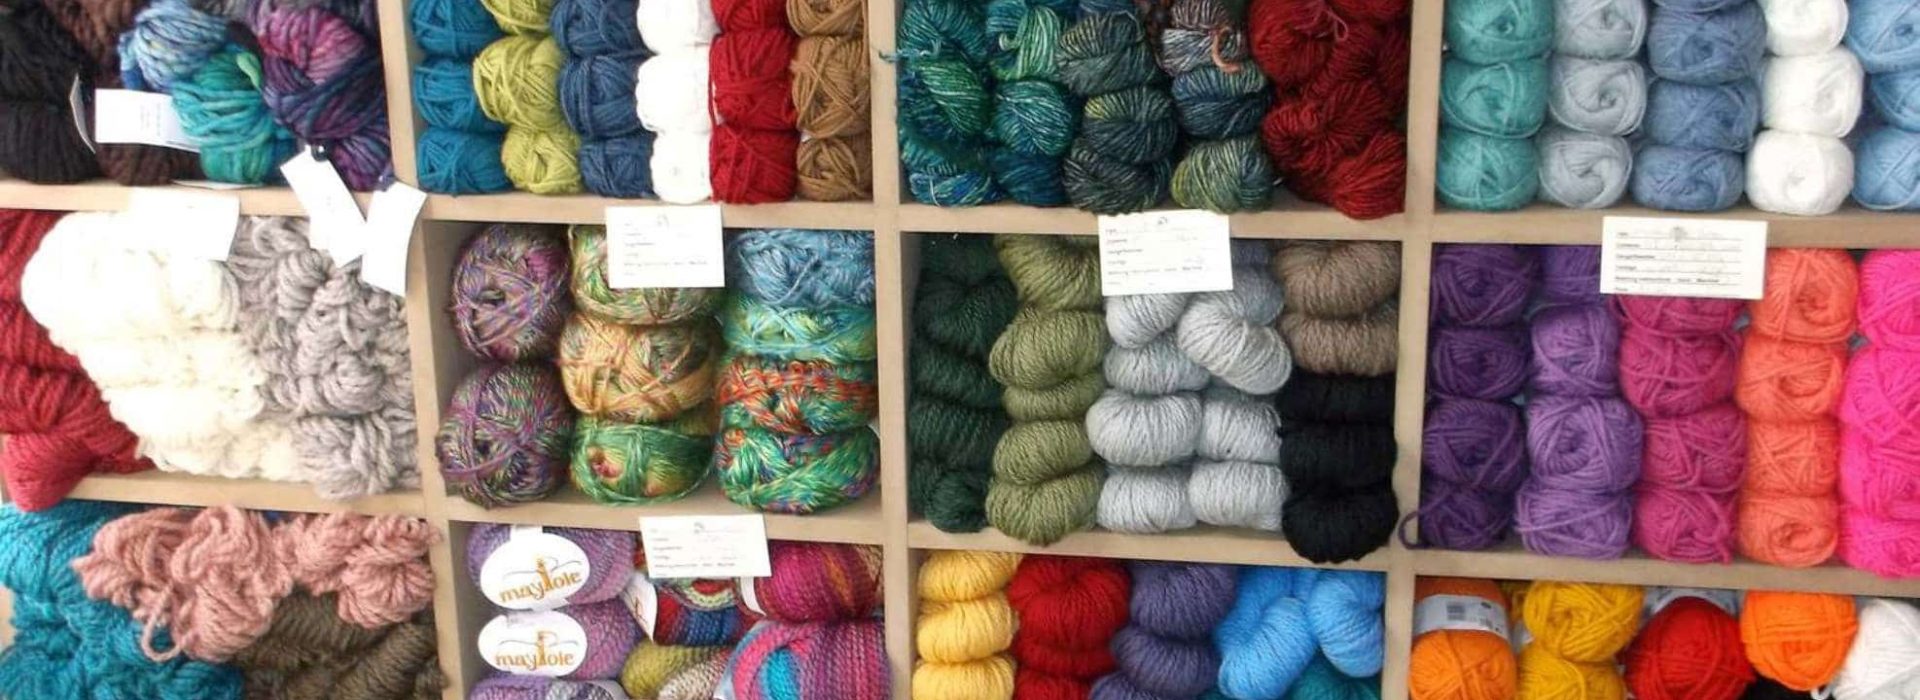 Yarn shops in Vermont|LYS Love Yarn Shop Bethlehem NH|LYS Love Yarn Shop Bethlehem New Hampshire